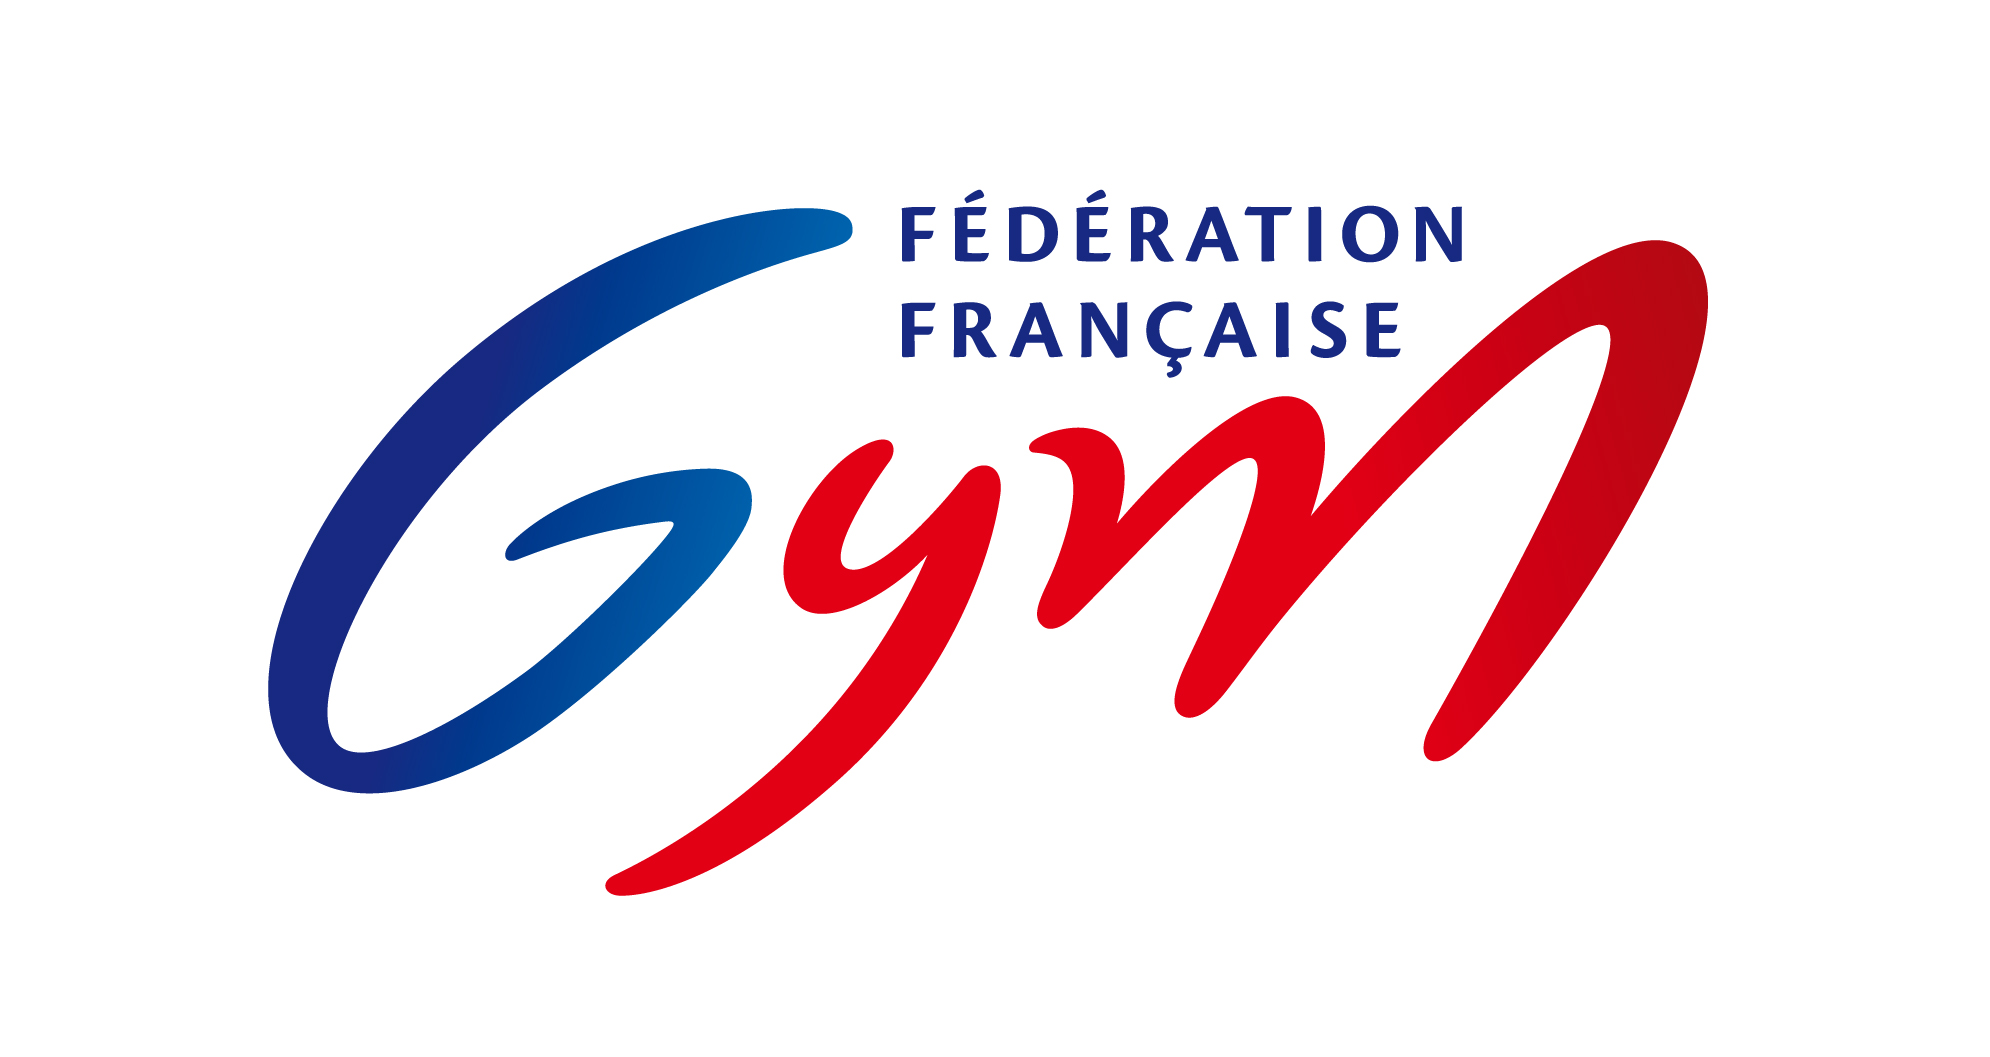 Logo FFGYM